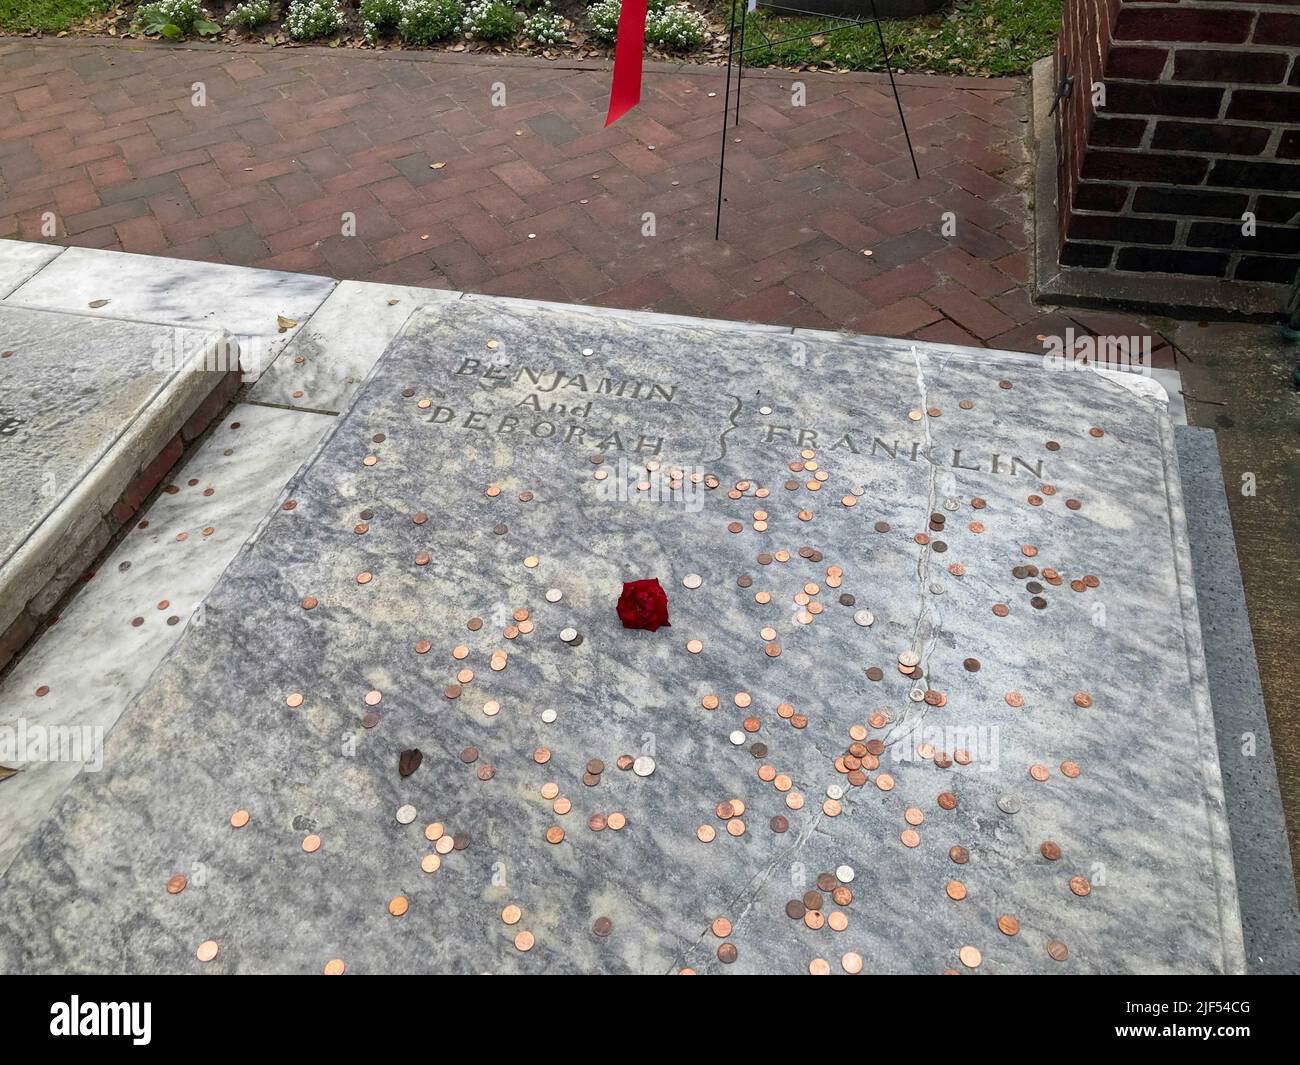 Ben Franklin Grave Site, Filadelfia, Pensilvania, EE.UU Foto de stock